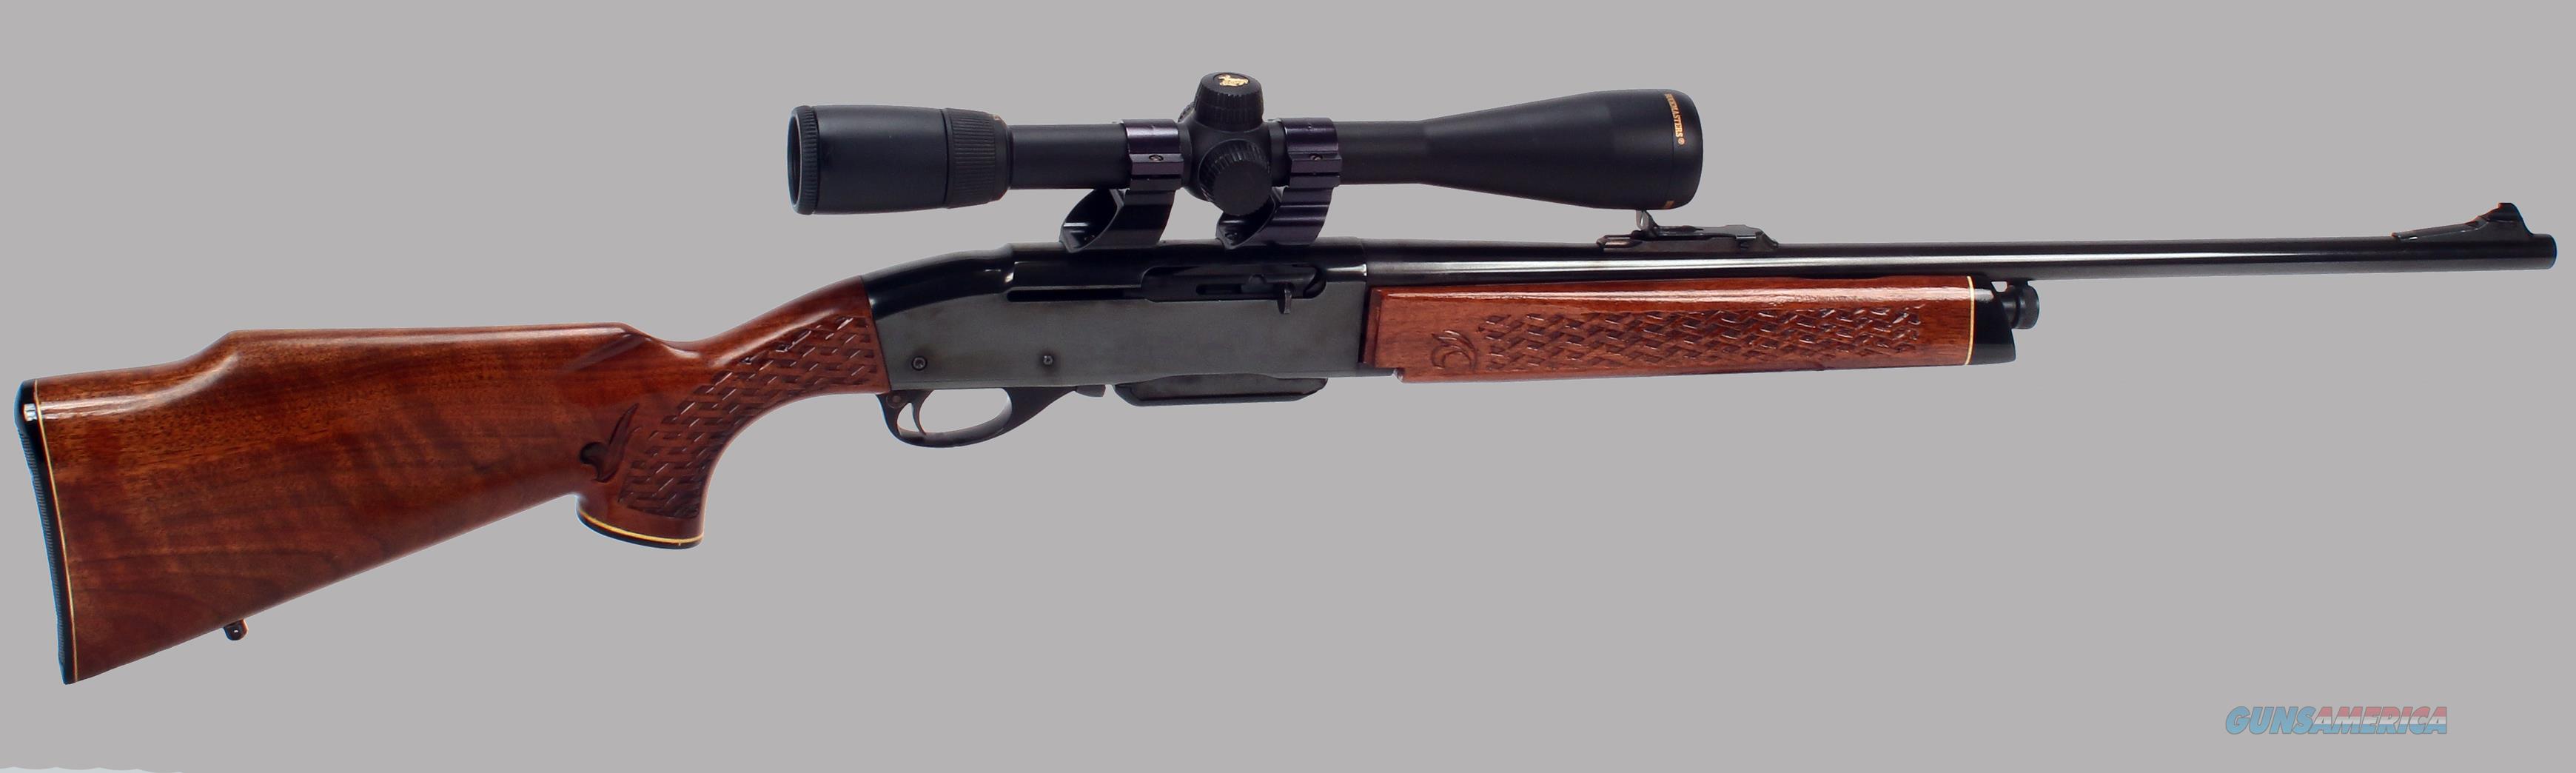 3006 remington rifle